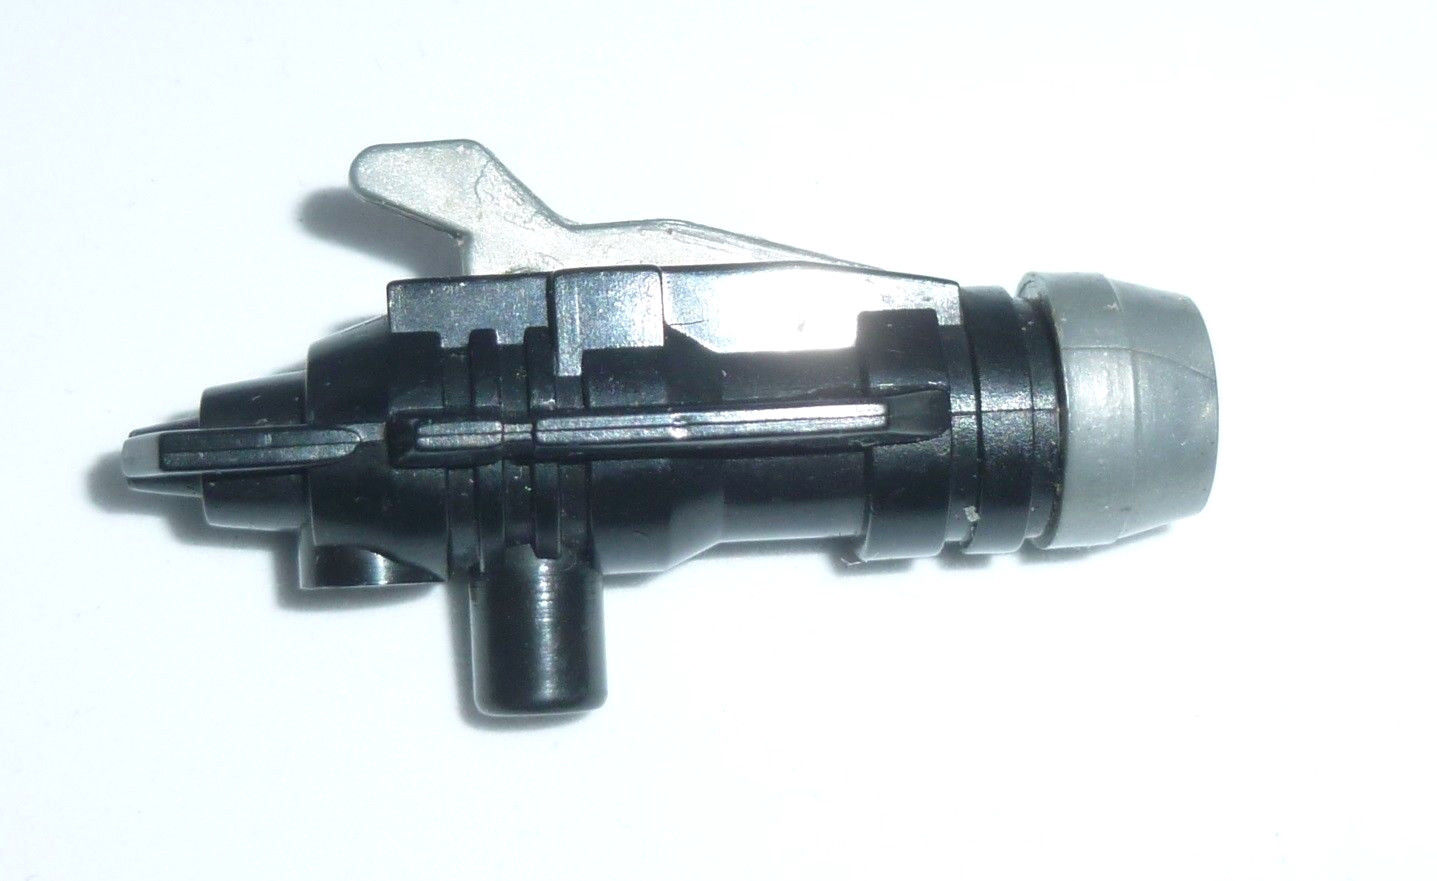 Dinobot Snarl - Weapon Waffe Launcher Blaster